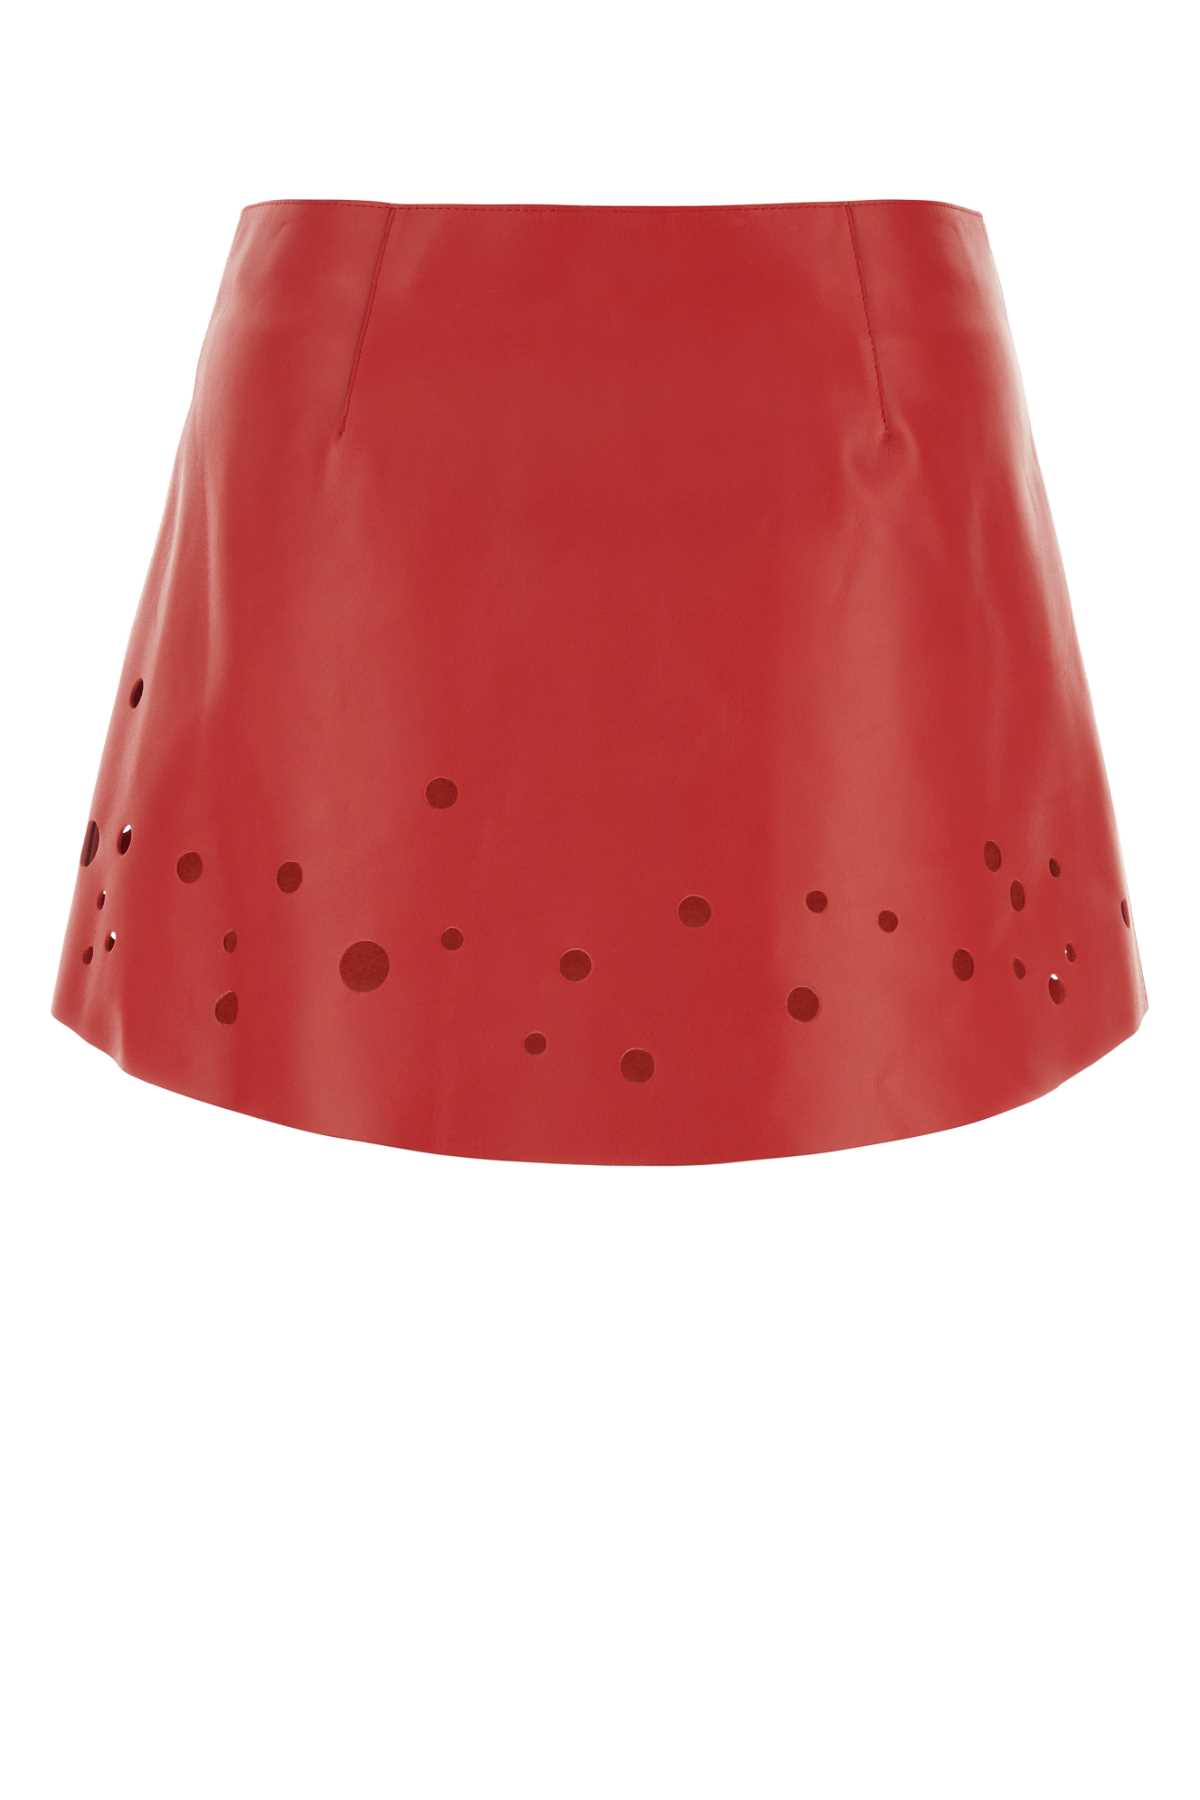 Shop Durazzi Milano Red Leather Mini Skirt